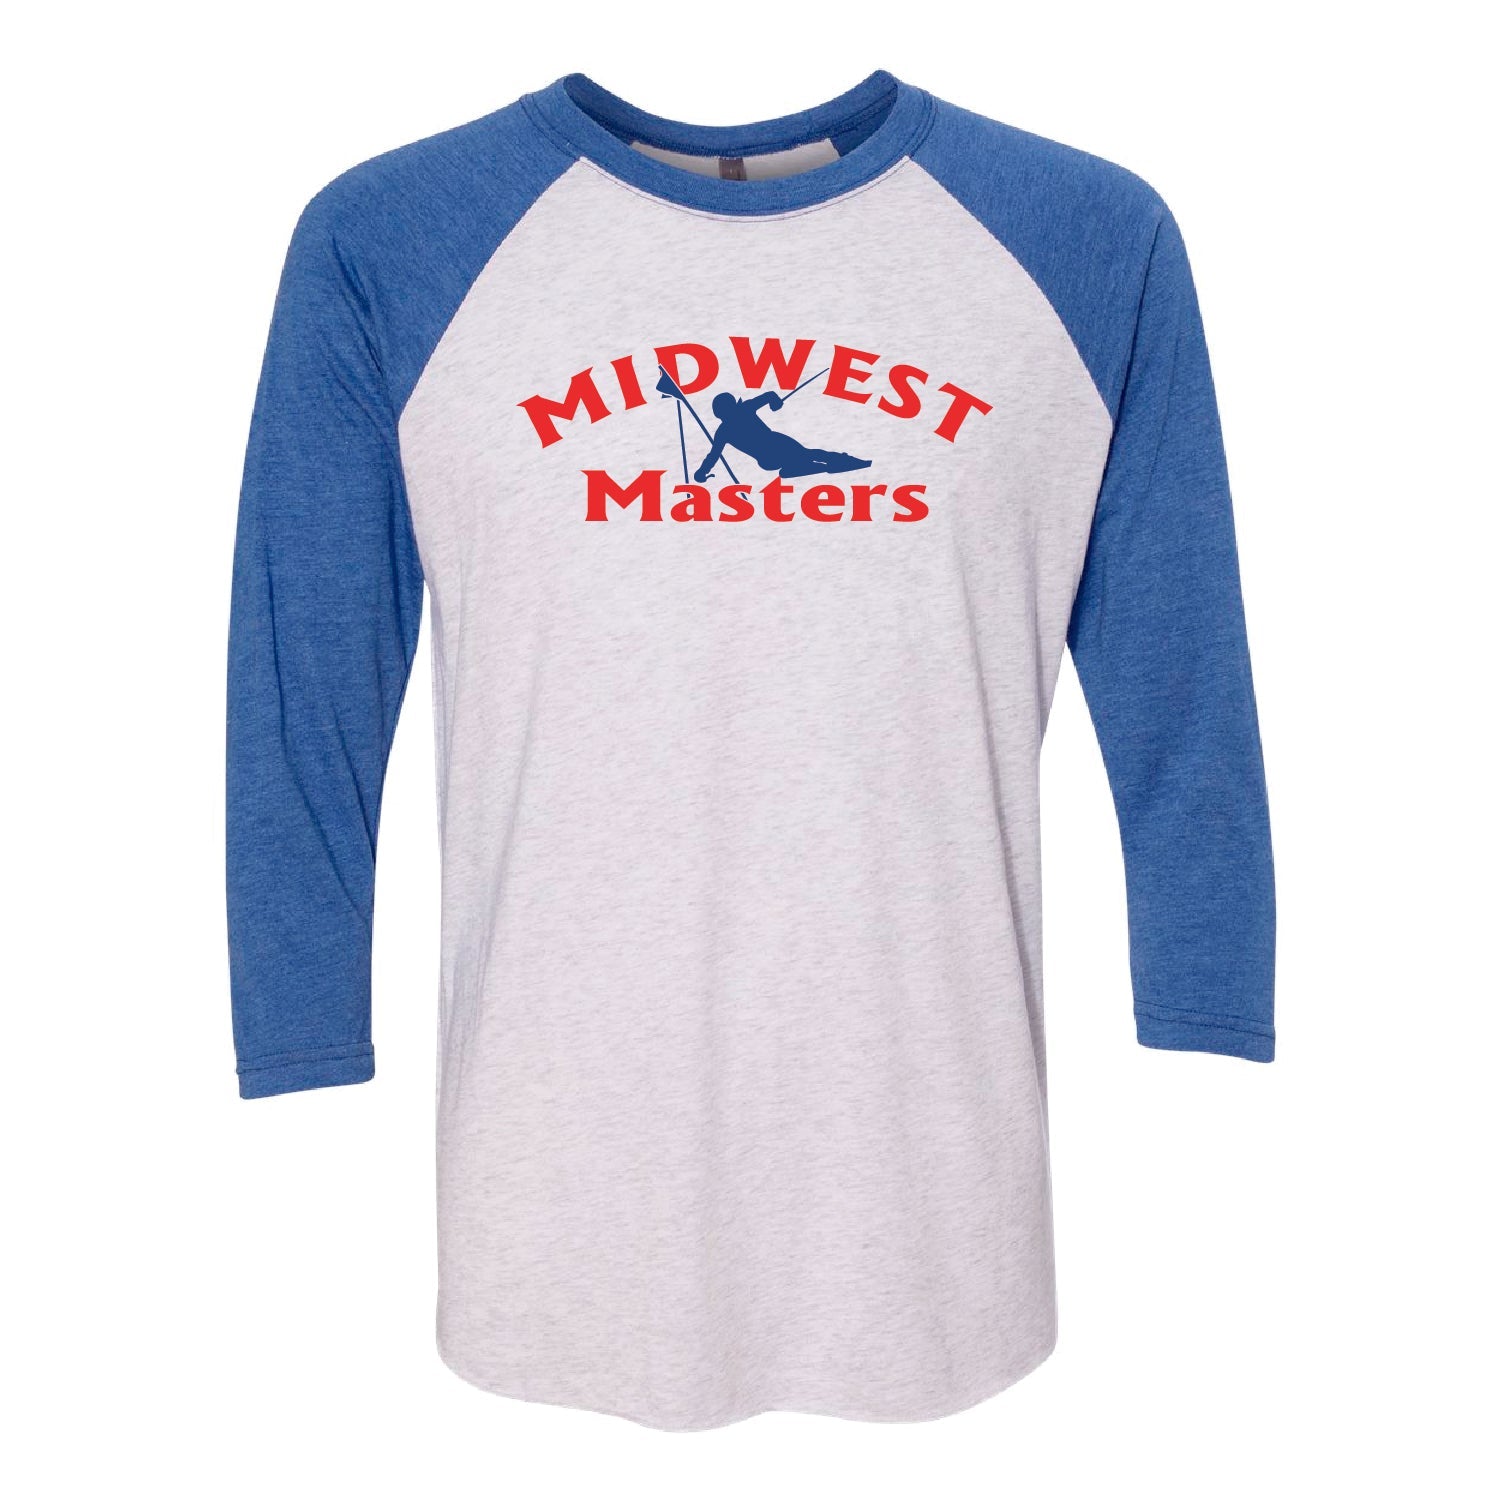 Midwest Masters Unisex Raglan Shirt - DSP On Demand